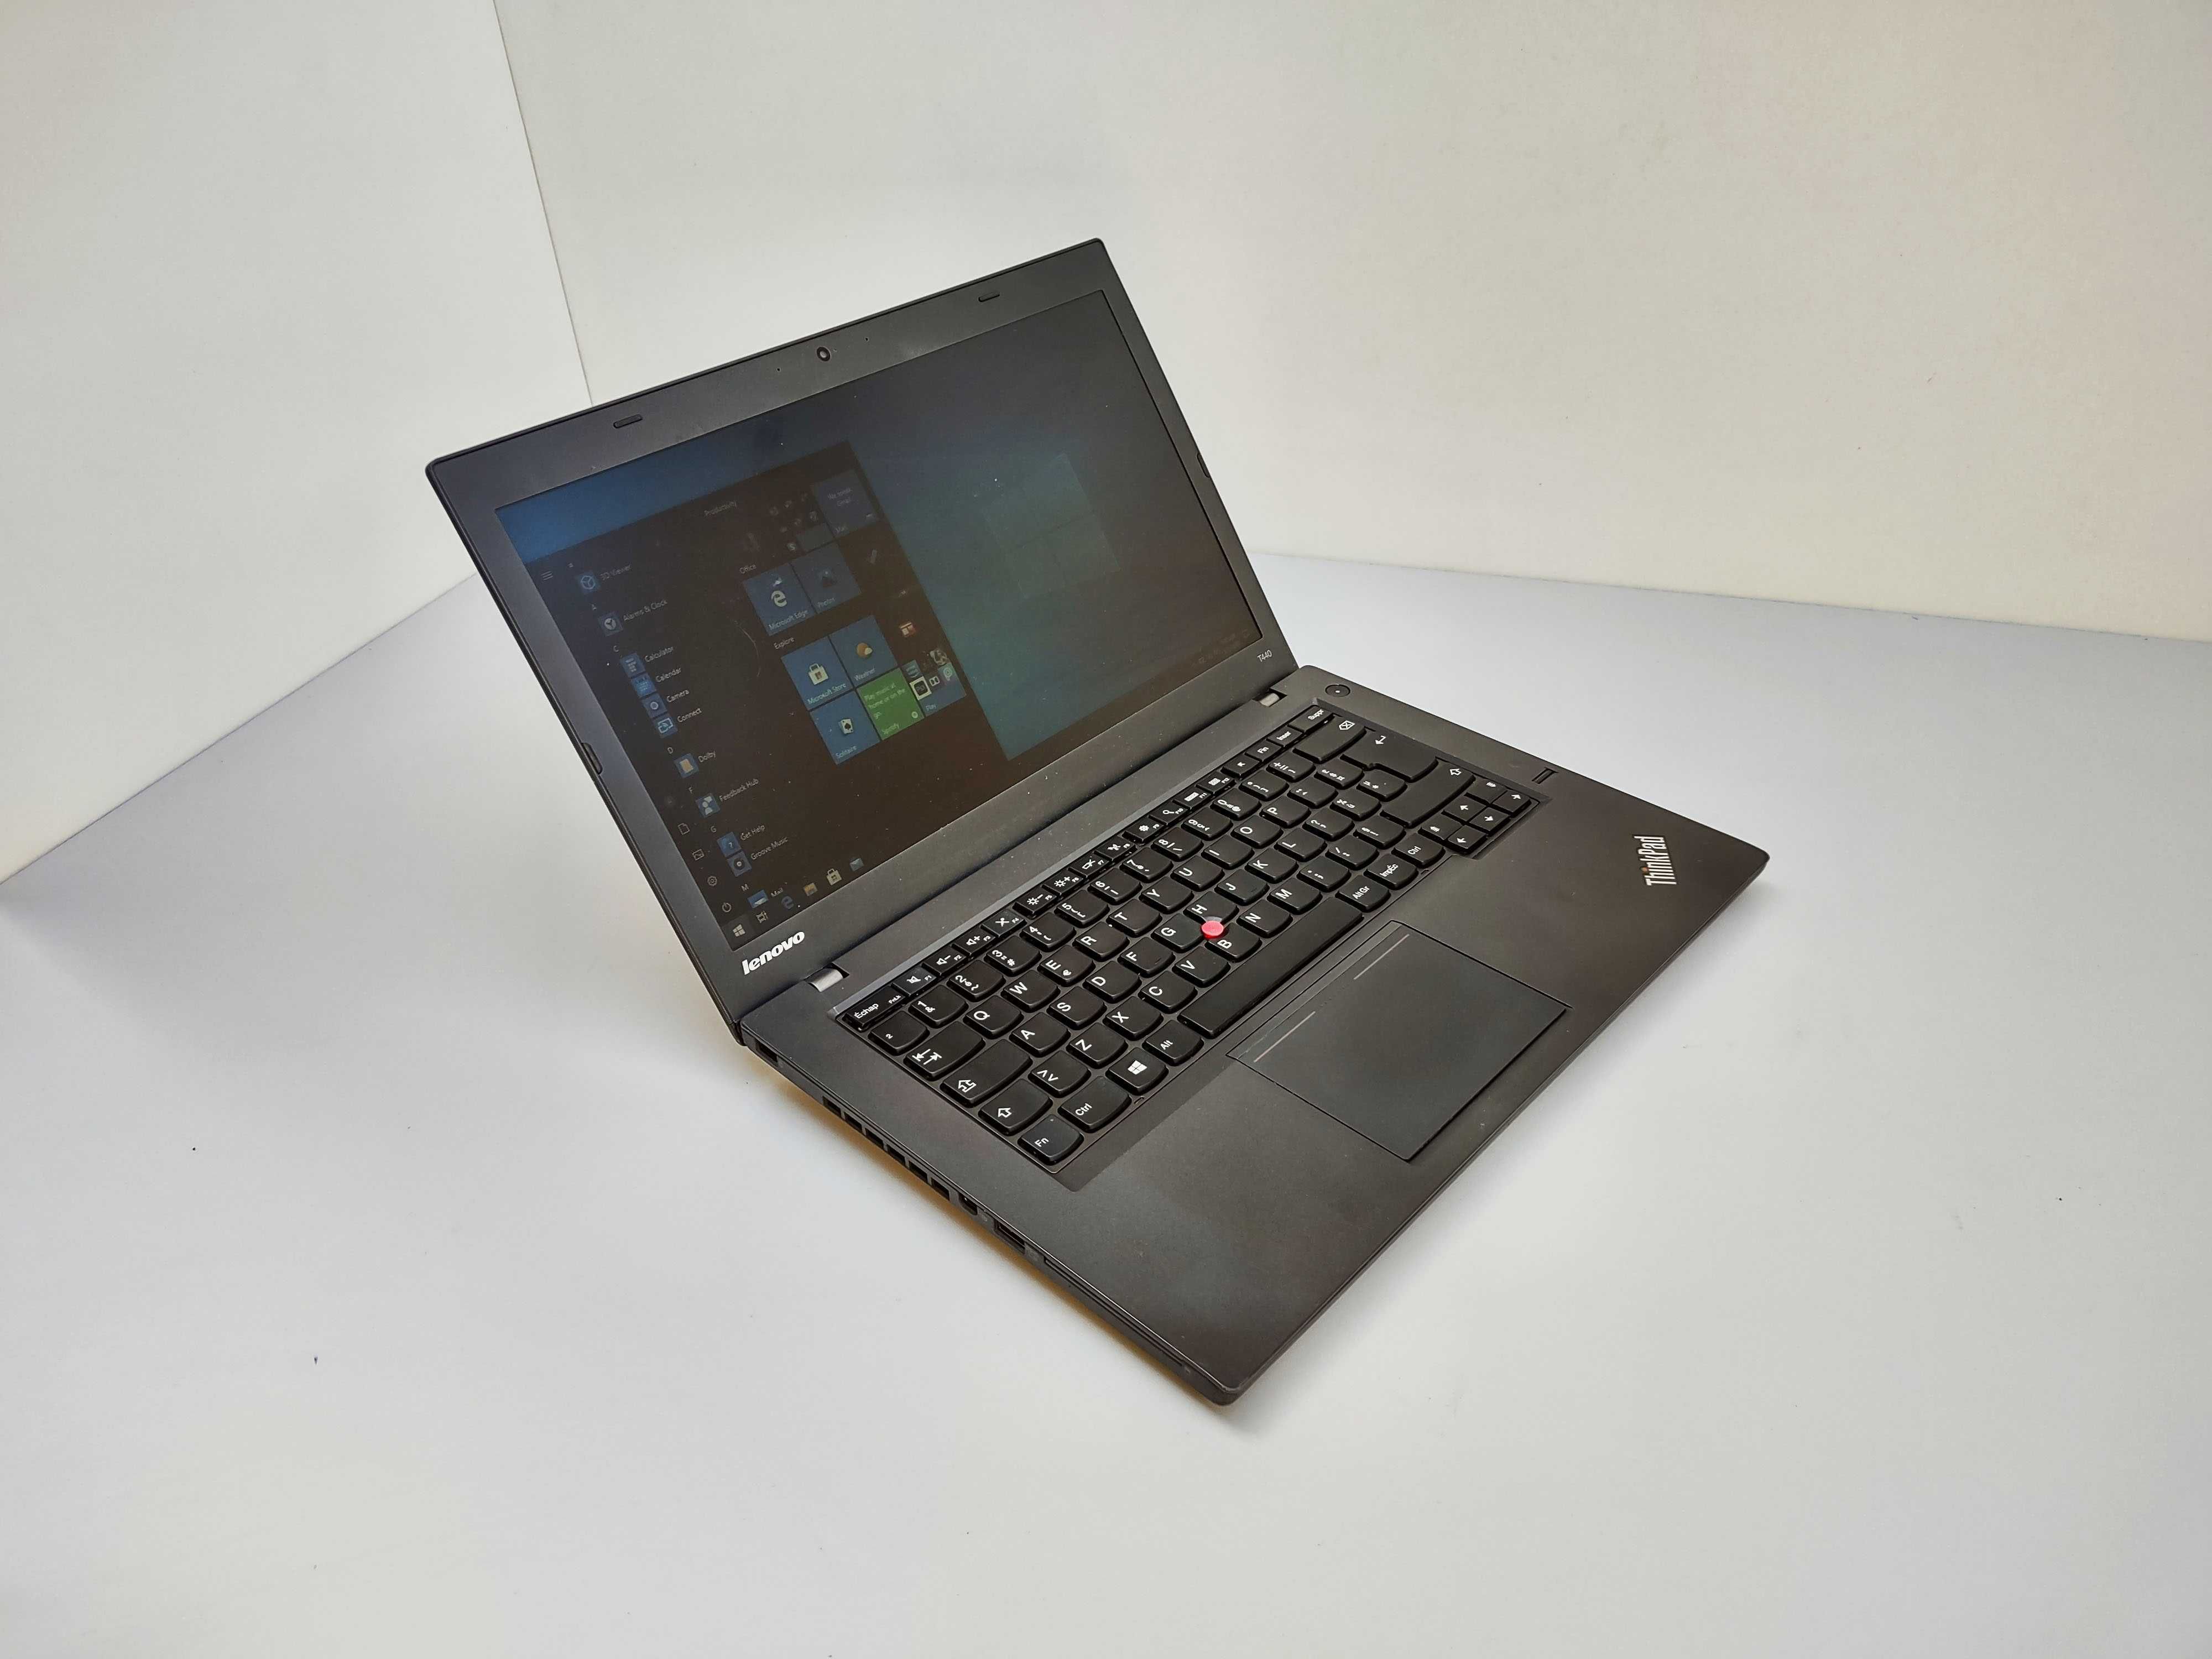 REDUCERE ! Lenovo ThinkPad T440 la doar 799 lei